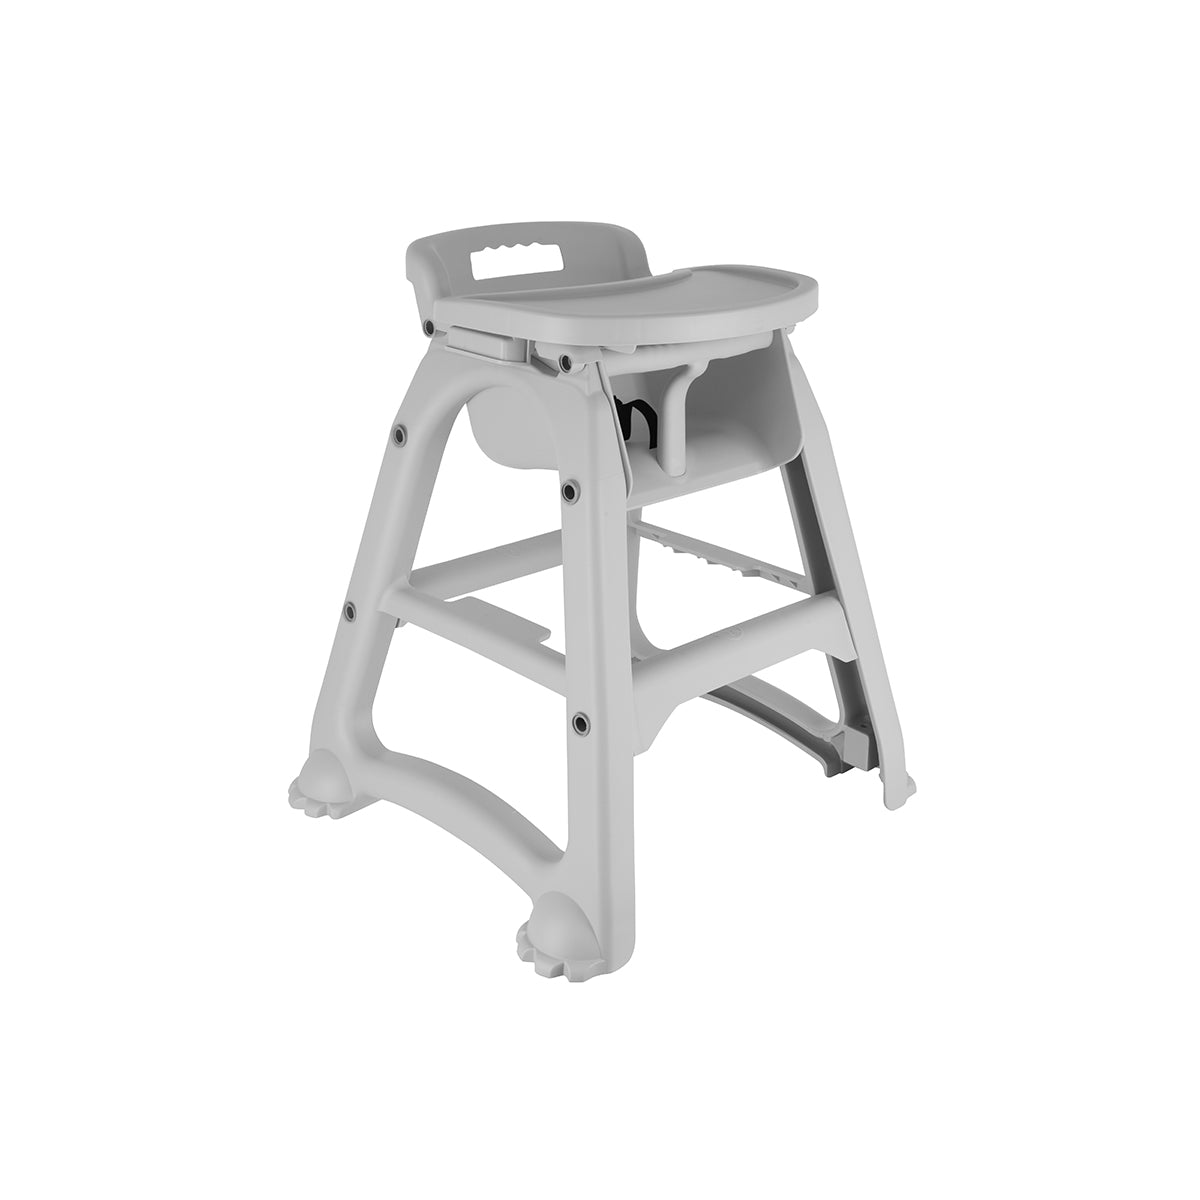 JW-DA-GREY Jiwins Childrens High Chair Grey Polypropylene 590x640x740mm Tomkin Australia Hospitality Supplies